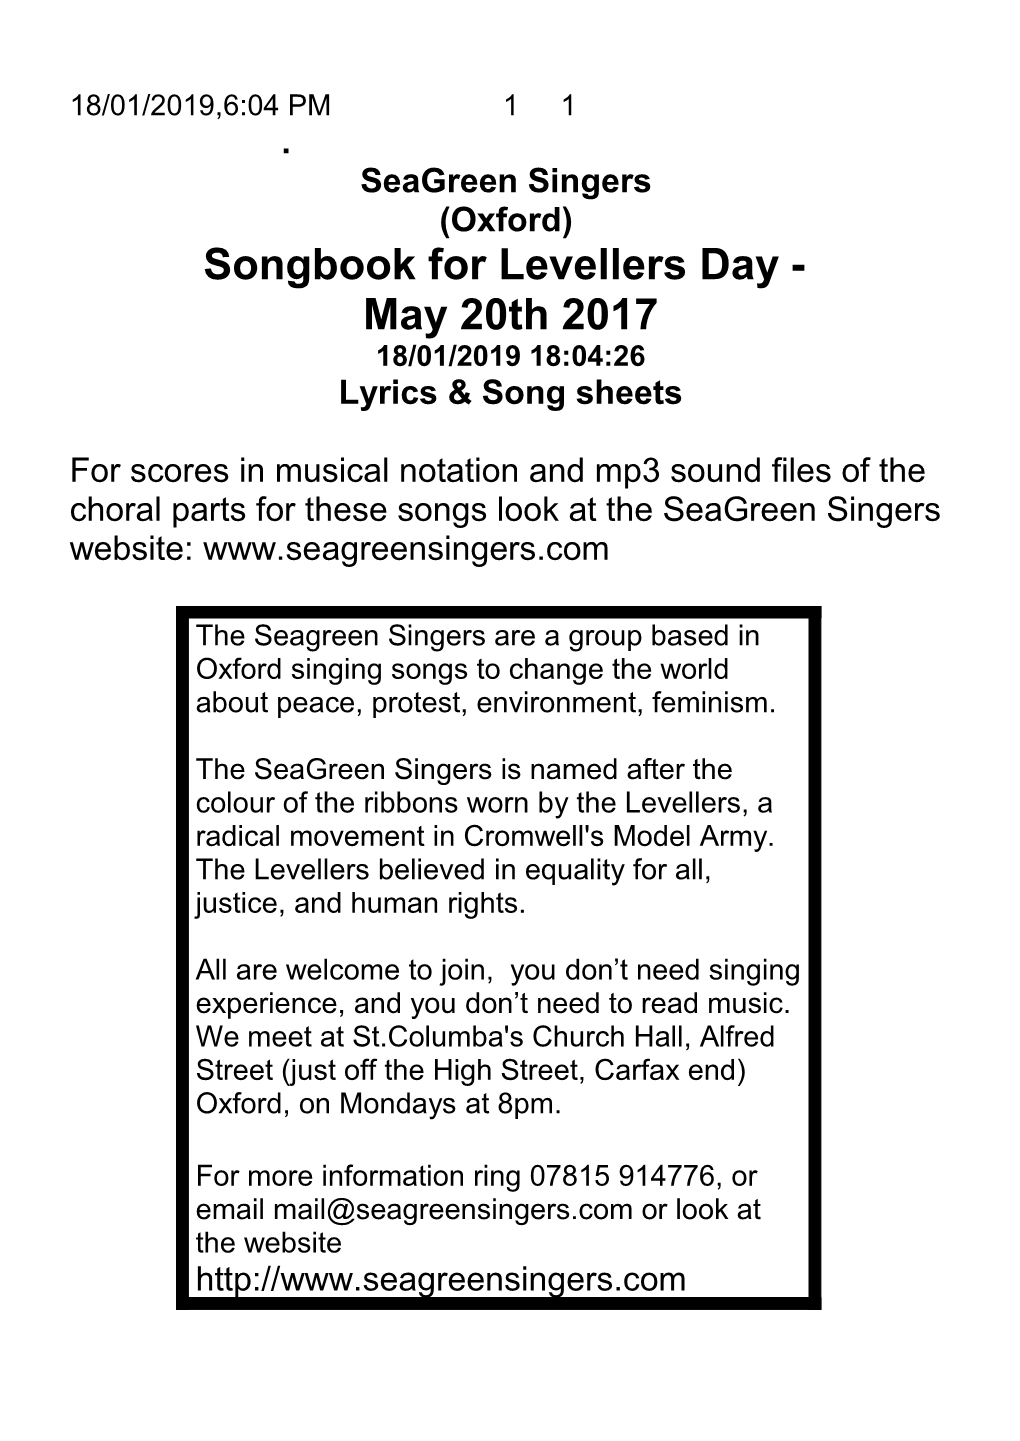 Seagreen Singers (Oxford) Lyrics & Song Sheets